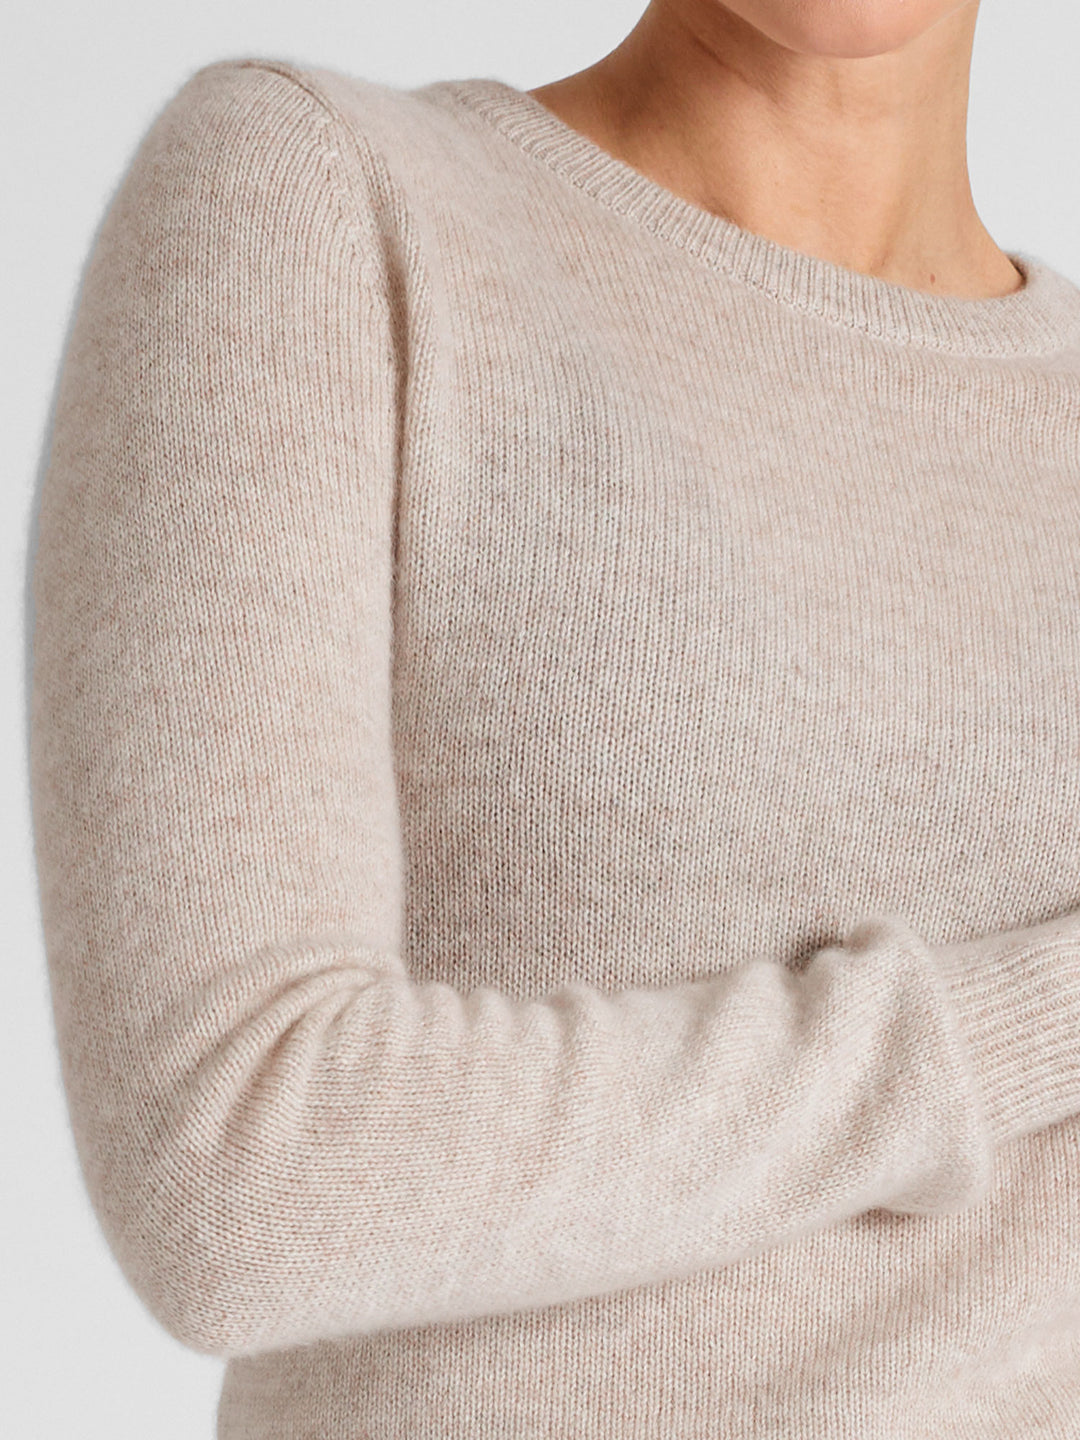 Cashmere sweater round neck "Saga" in 100% pure cashmere. Scandinavian design by Kashmina.  Color: Beige.